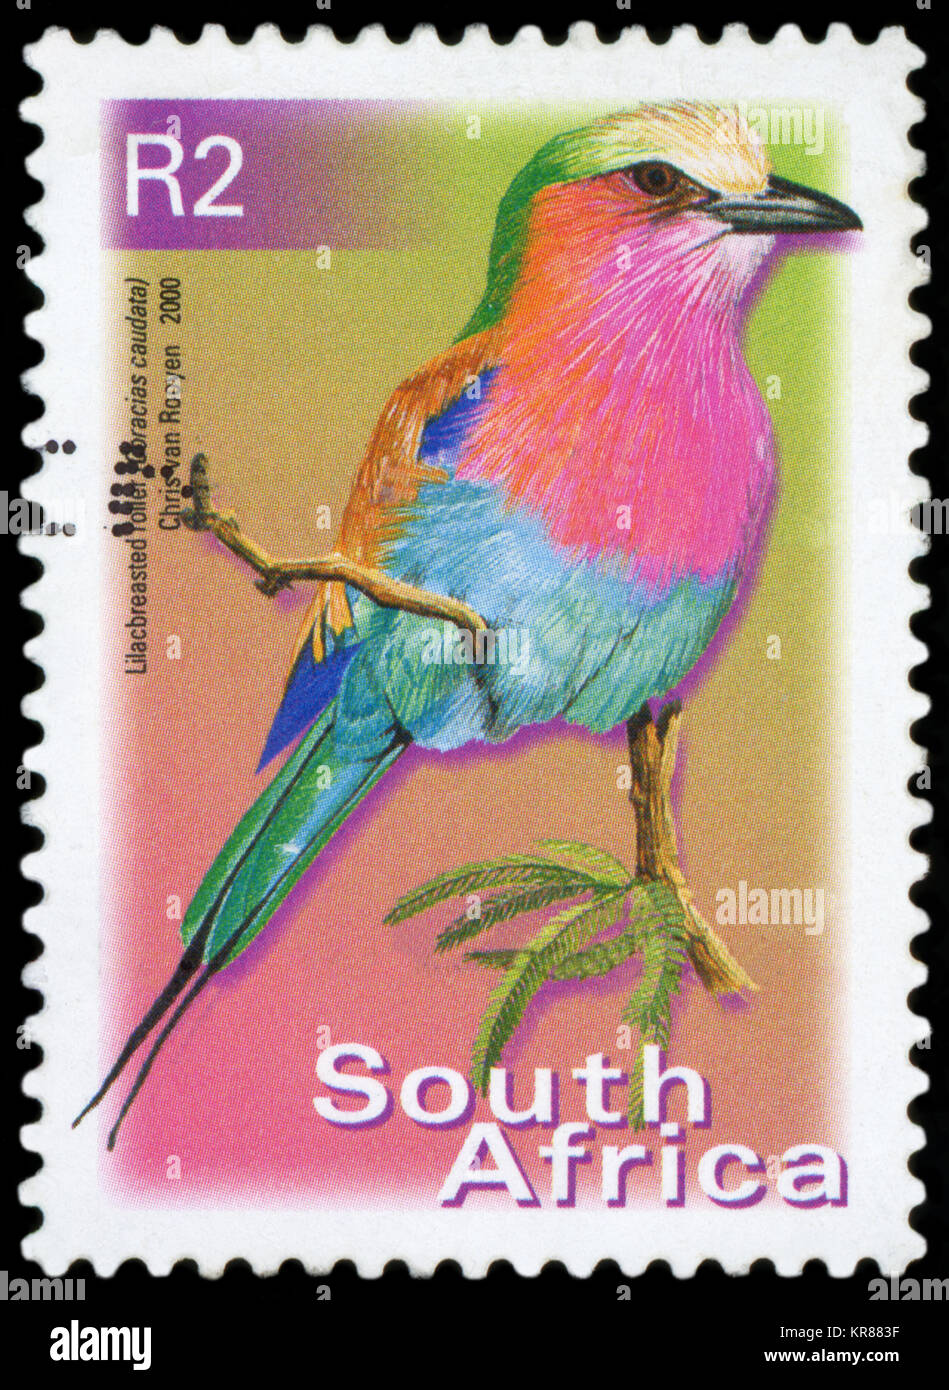 SOUTH AFRICA - CIRCA 2000: A stamp printed in South Africa, shows a bird Lilac-brested Roller (Coracias caudata), circa 2000 Stock Photo